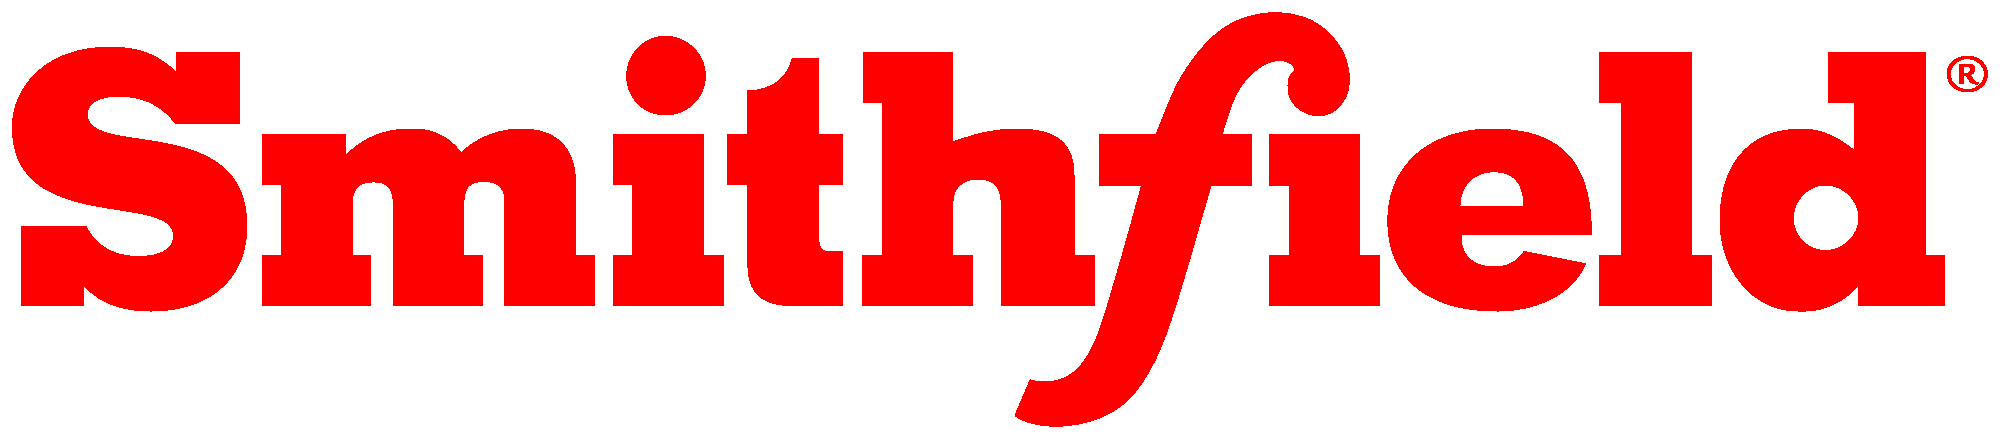 Smithfield prod Logo photo - 1